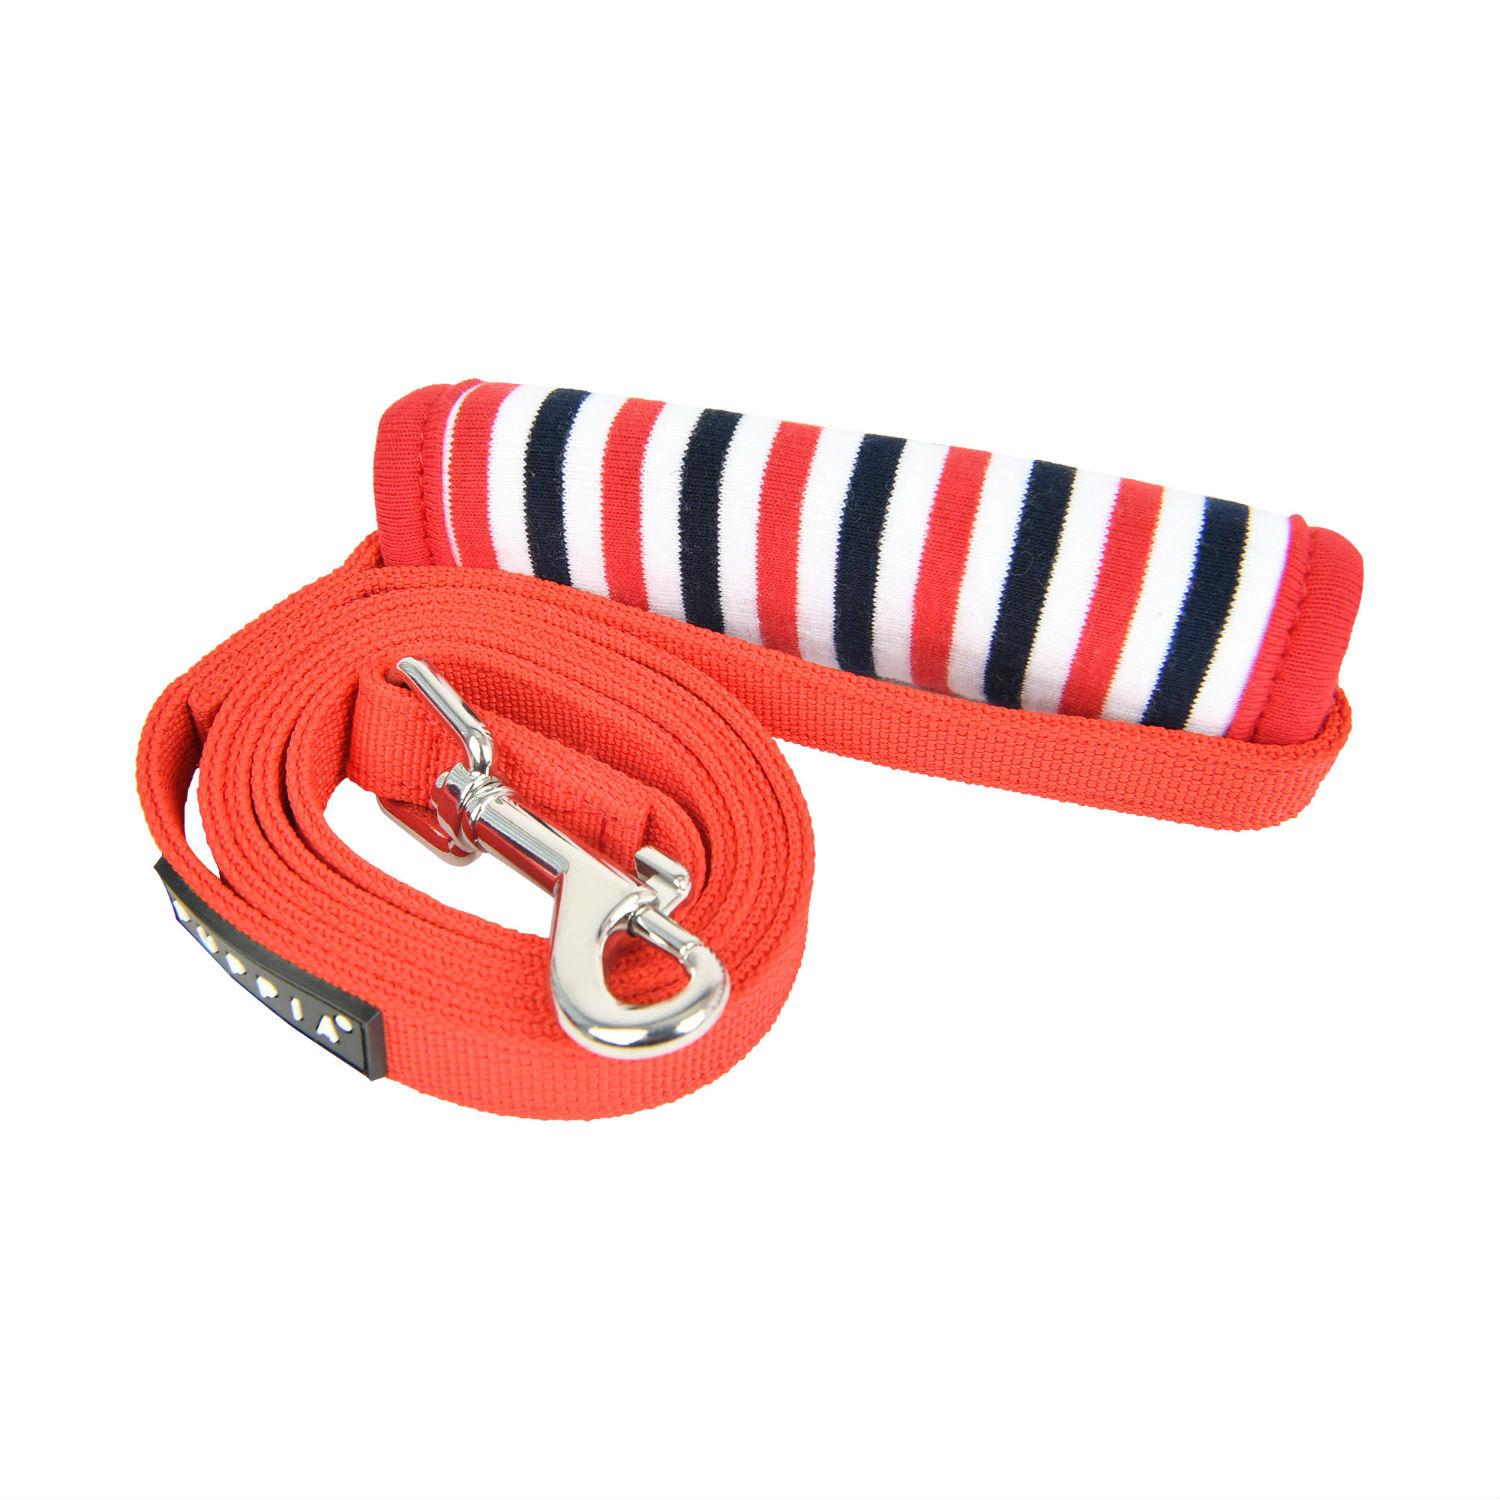 Seaman Dog Leash by Puppia - Red